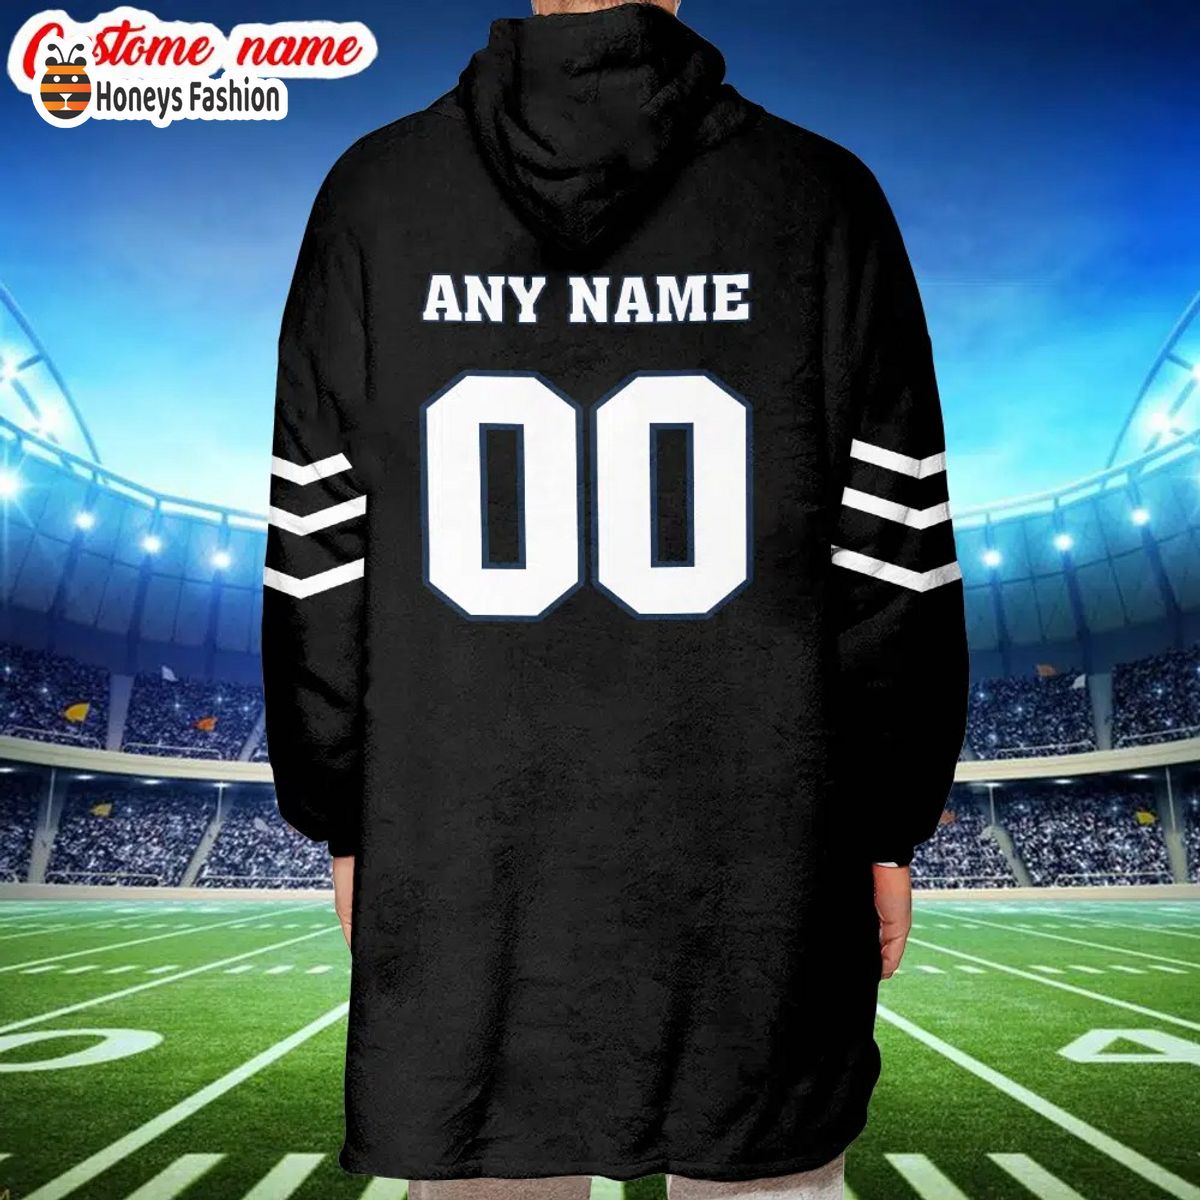 Las Vegas Raiders NFL Adidas all day i dream about Raiders  blanket hoodie